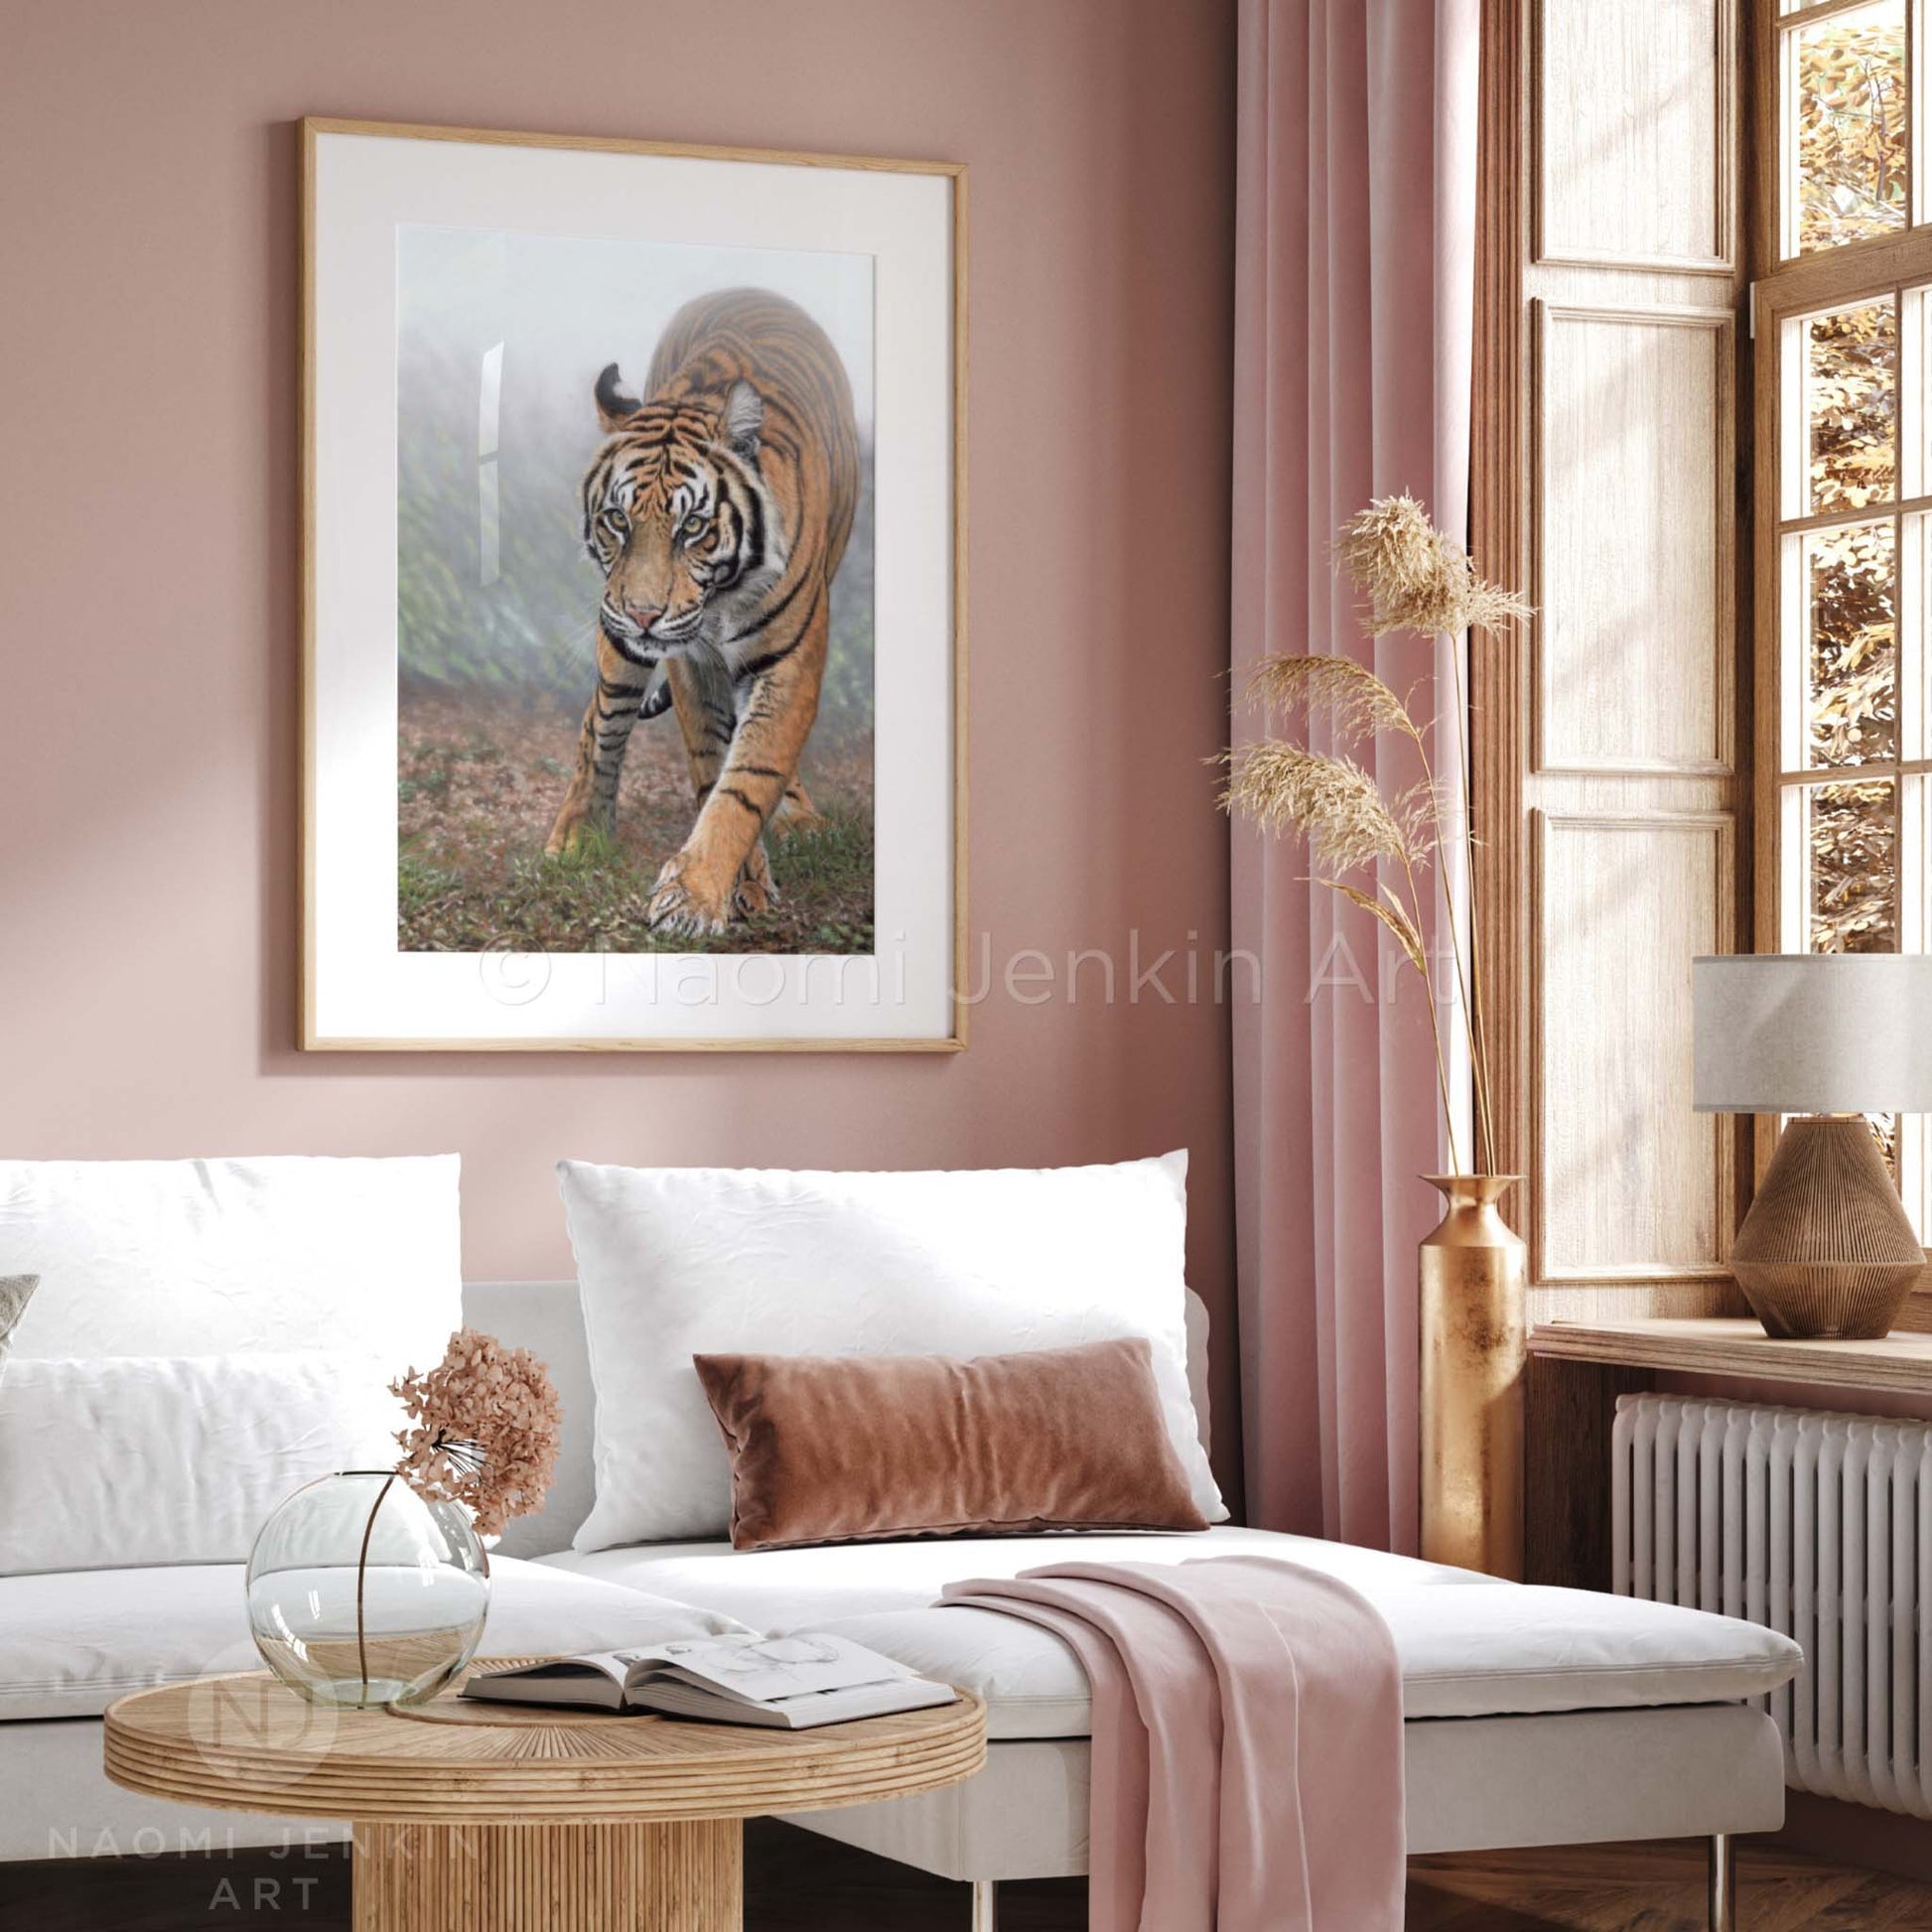 Framed limited edition tiger art print "Stealth" by Naomi Jenkin Art.